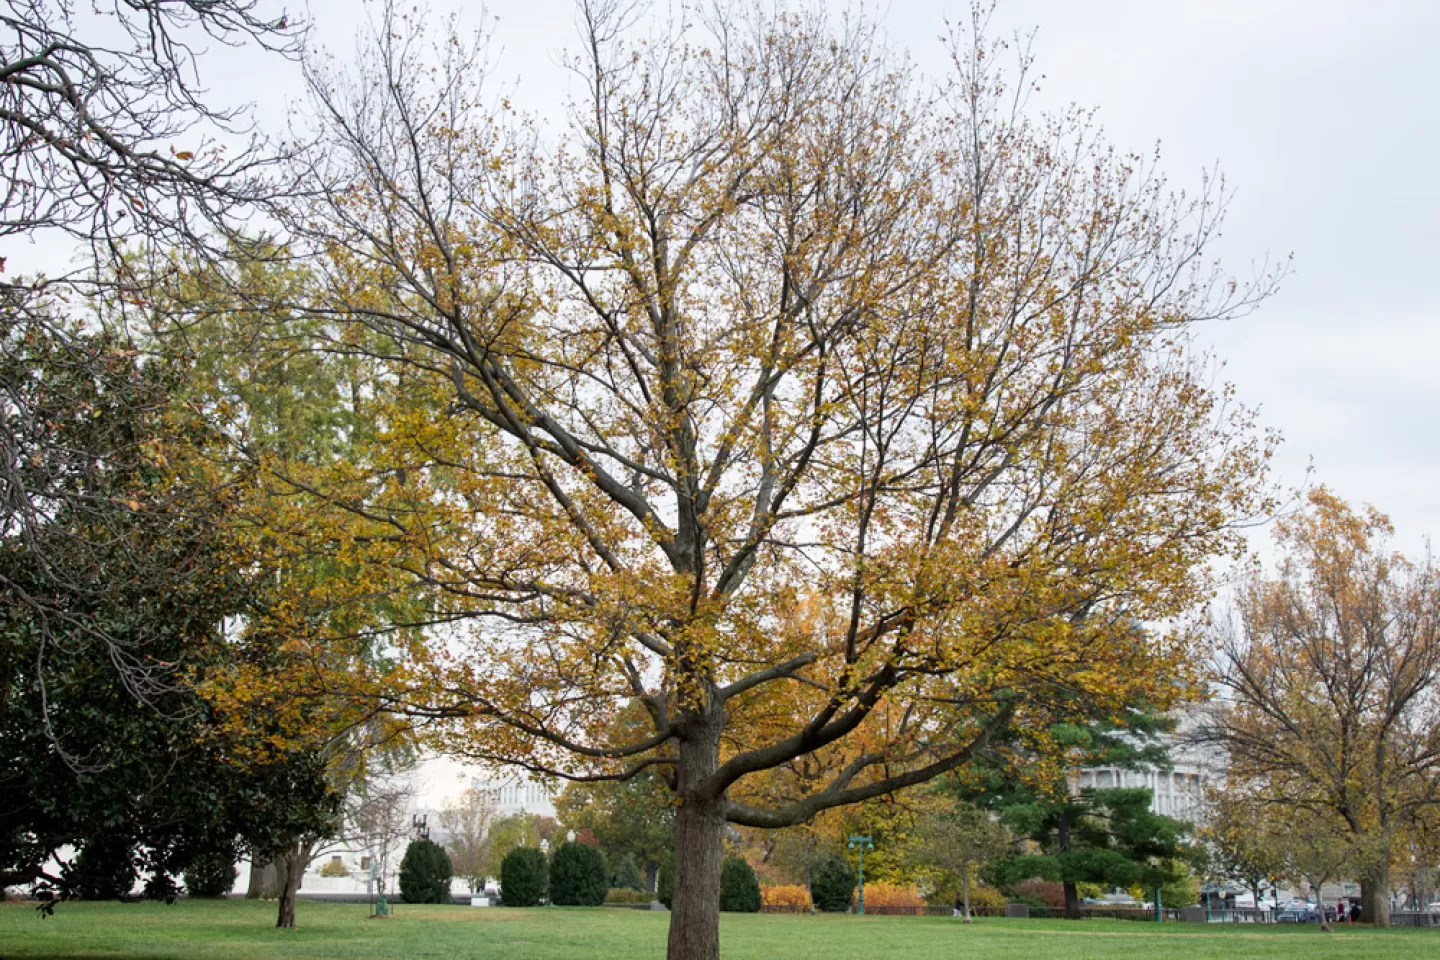 The Senator Saltonstall tree on the U.S. Capitol Grounds during fall.